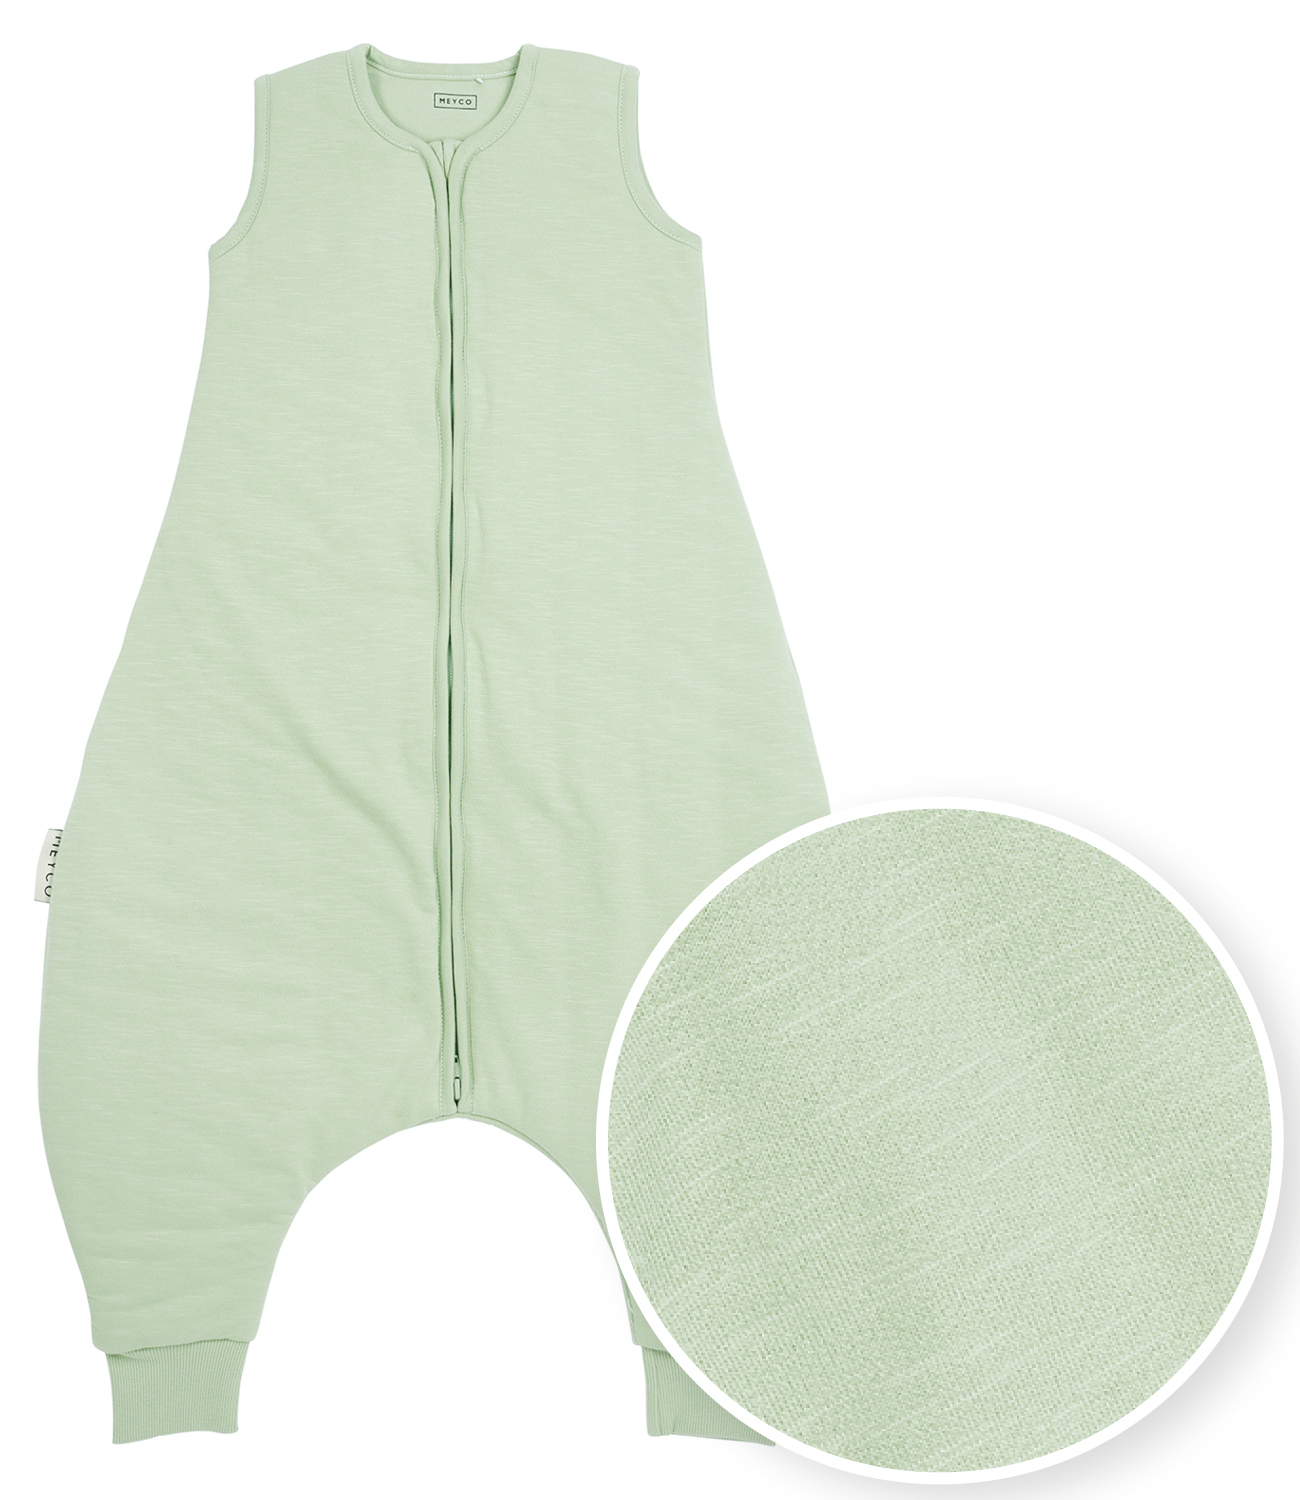 Baby winter Schlafoverall Jumper Slub - soft green - 80cm